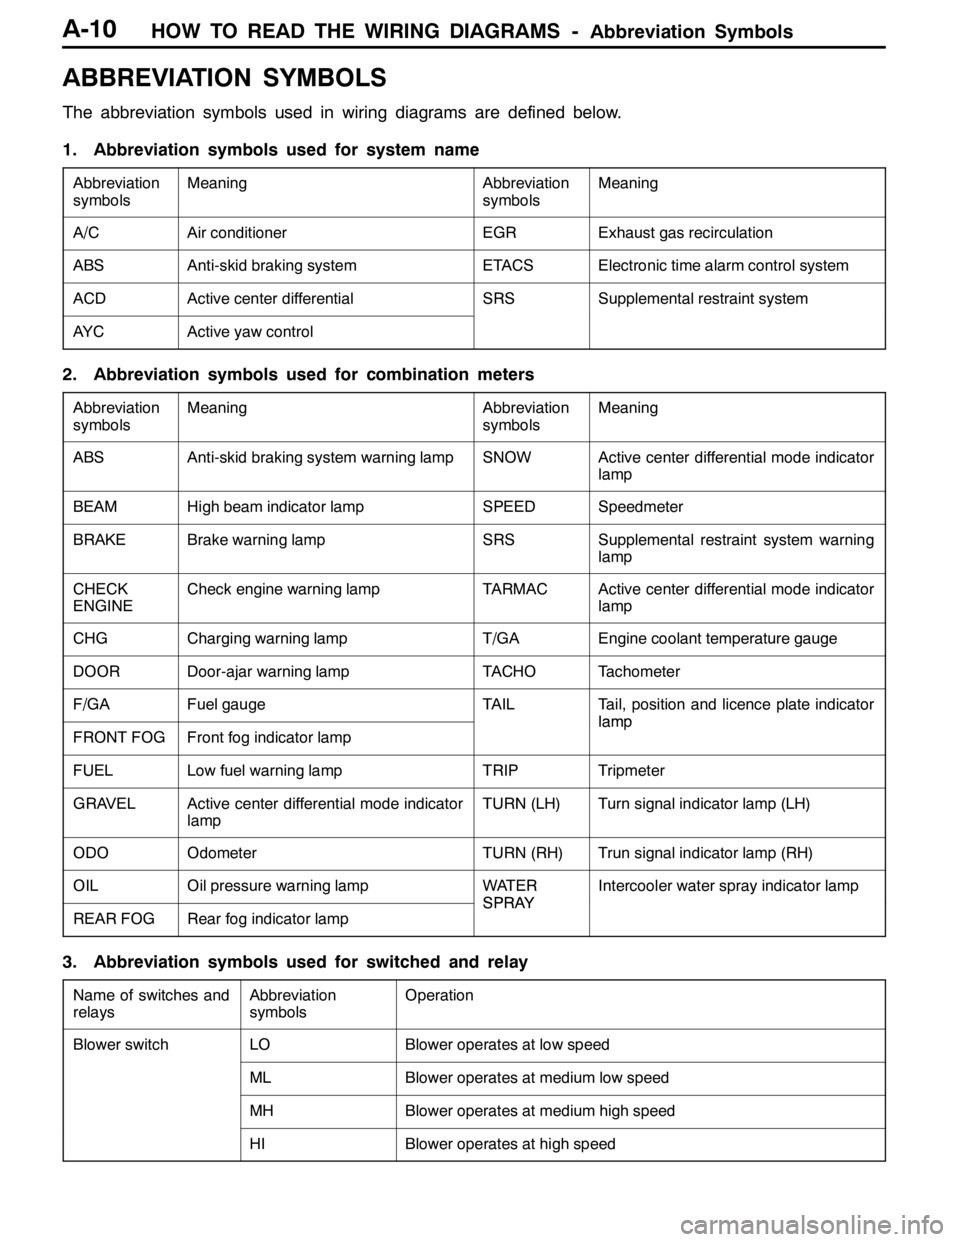 MITSUBISHI LANCER EVOLUTION 2007  Service Repair Manual HOW TO READ THE WIRING DIAGRAMS -Abbreviation SymbolsA-10
ABBREVIATION SYMBOLS
The abbreviation symbols used in wiring diagrams are defined below.
1. Abbreviation symbols used for system name
Abbrevia